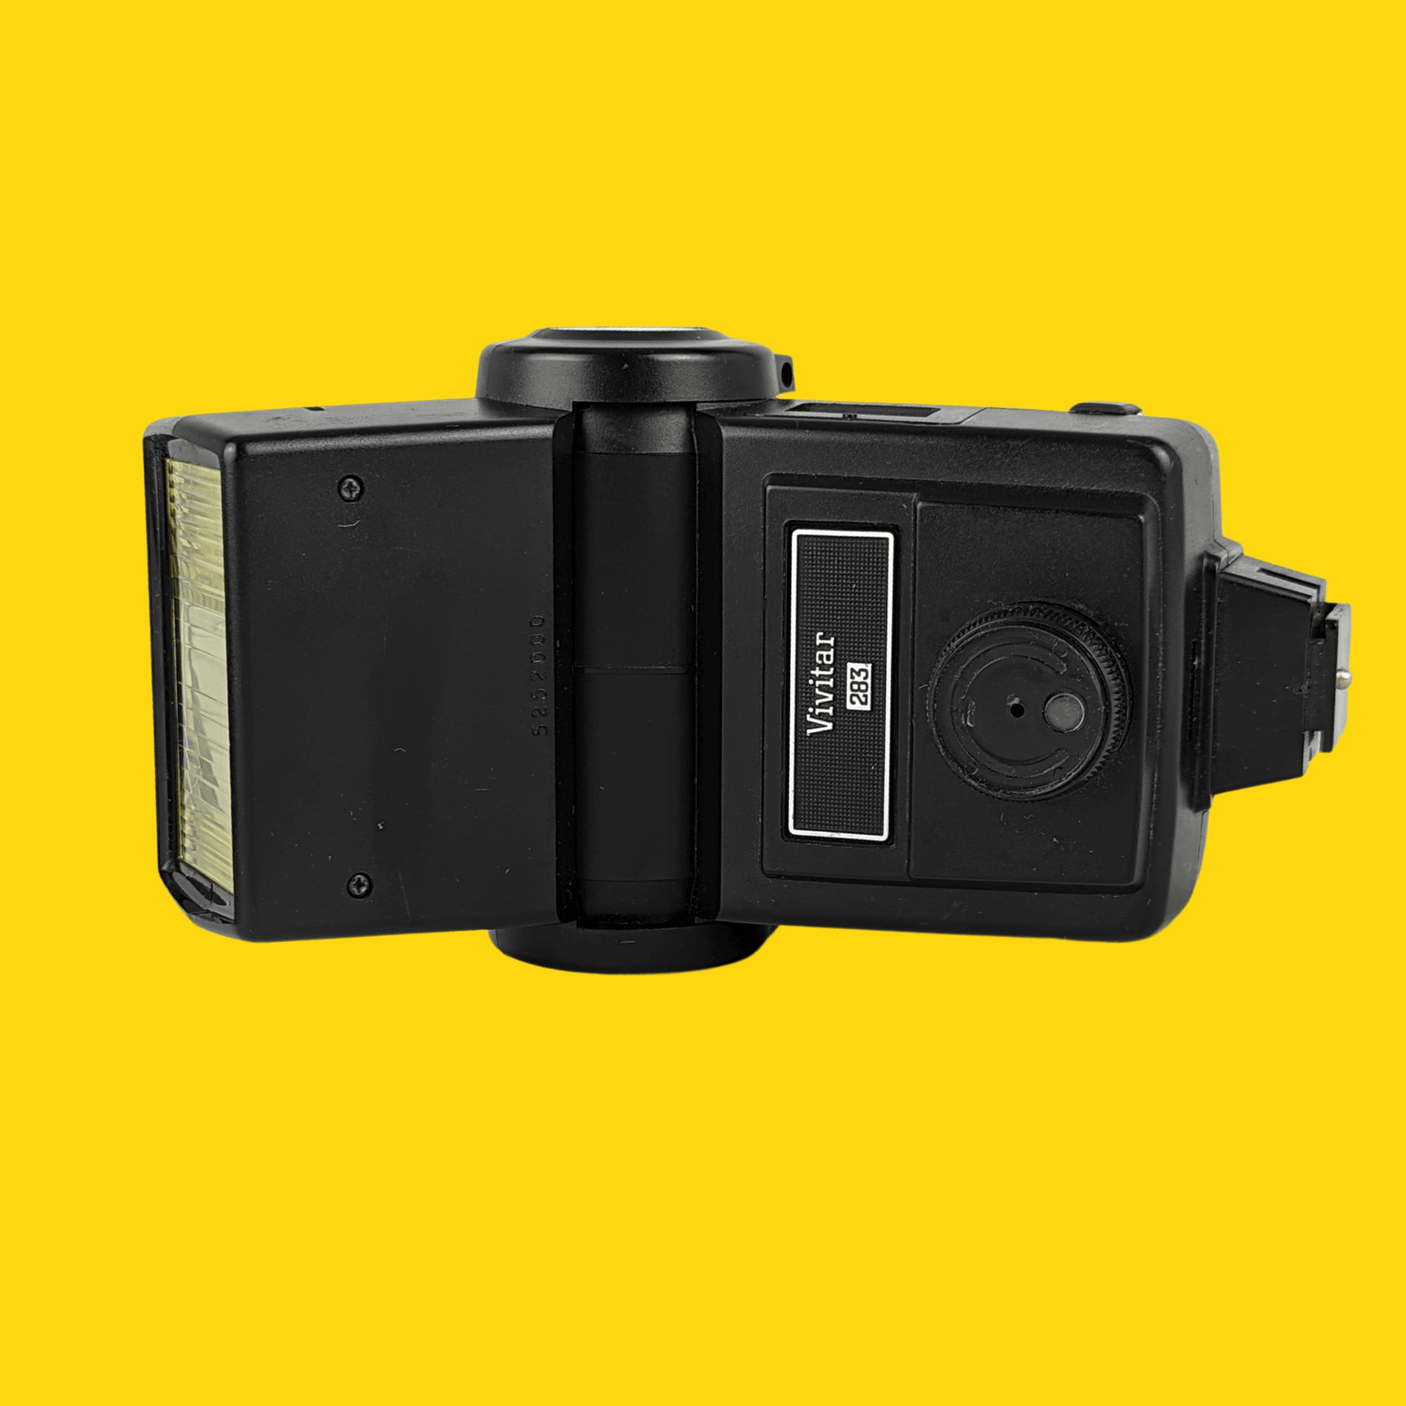 Vivitar 283 External Flash Unit for 35mm Film Camera